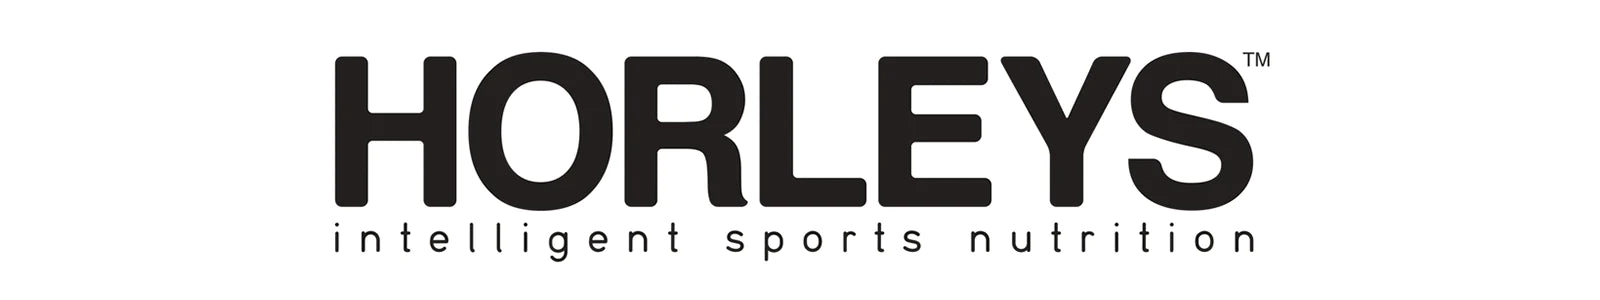 Horleys logo